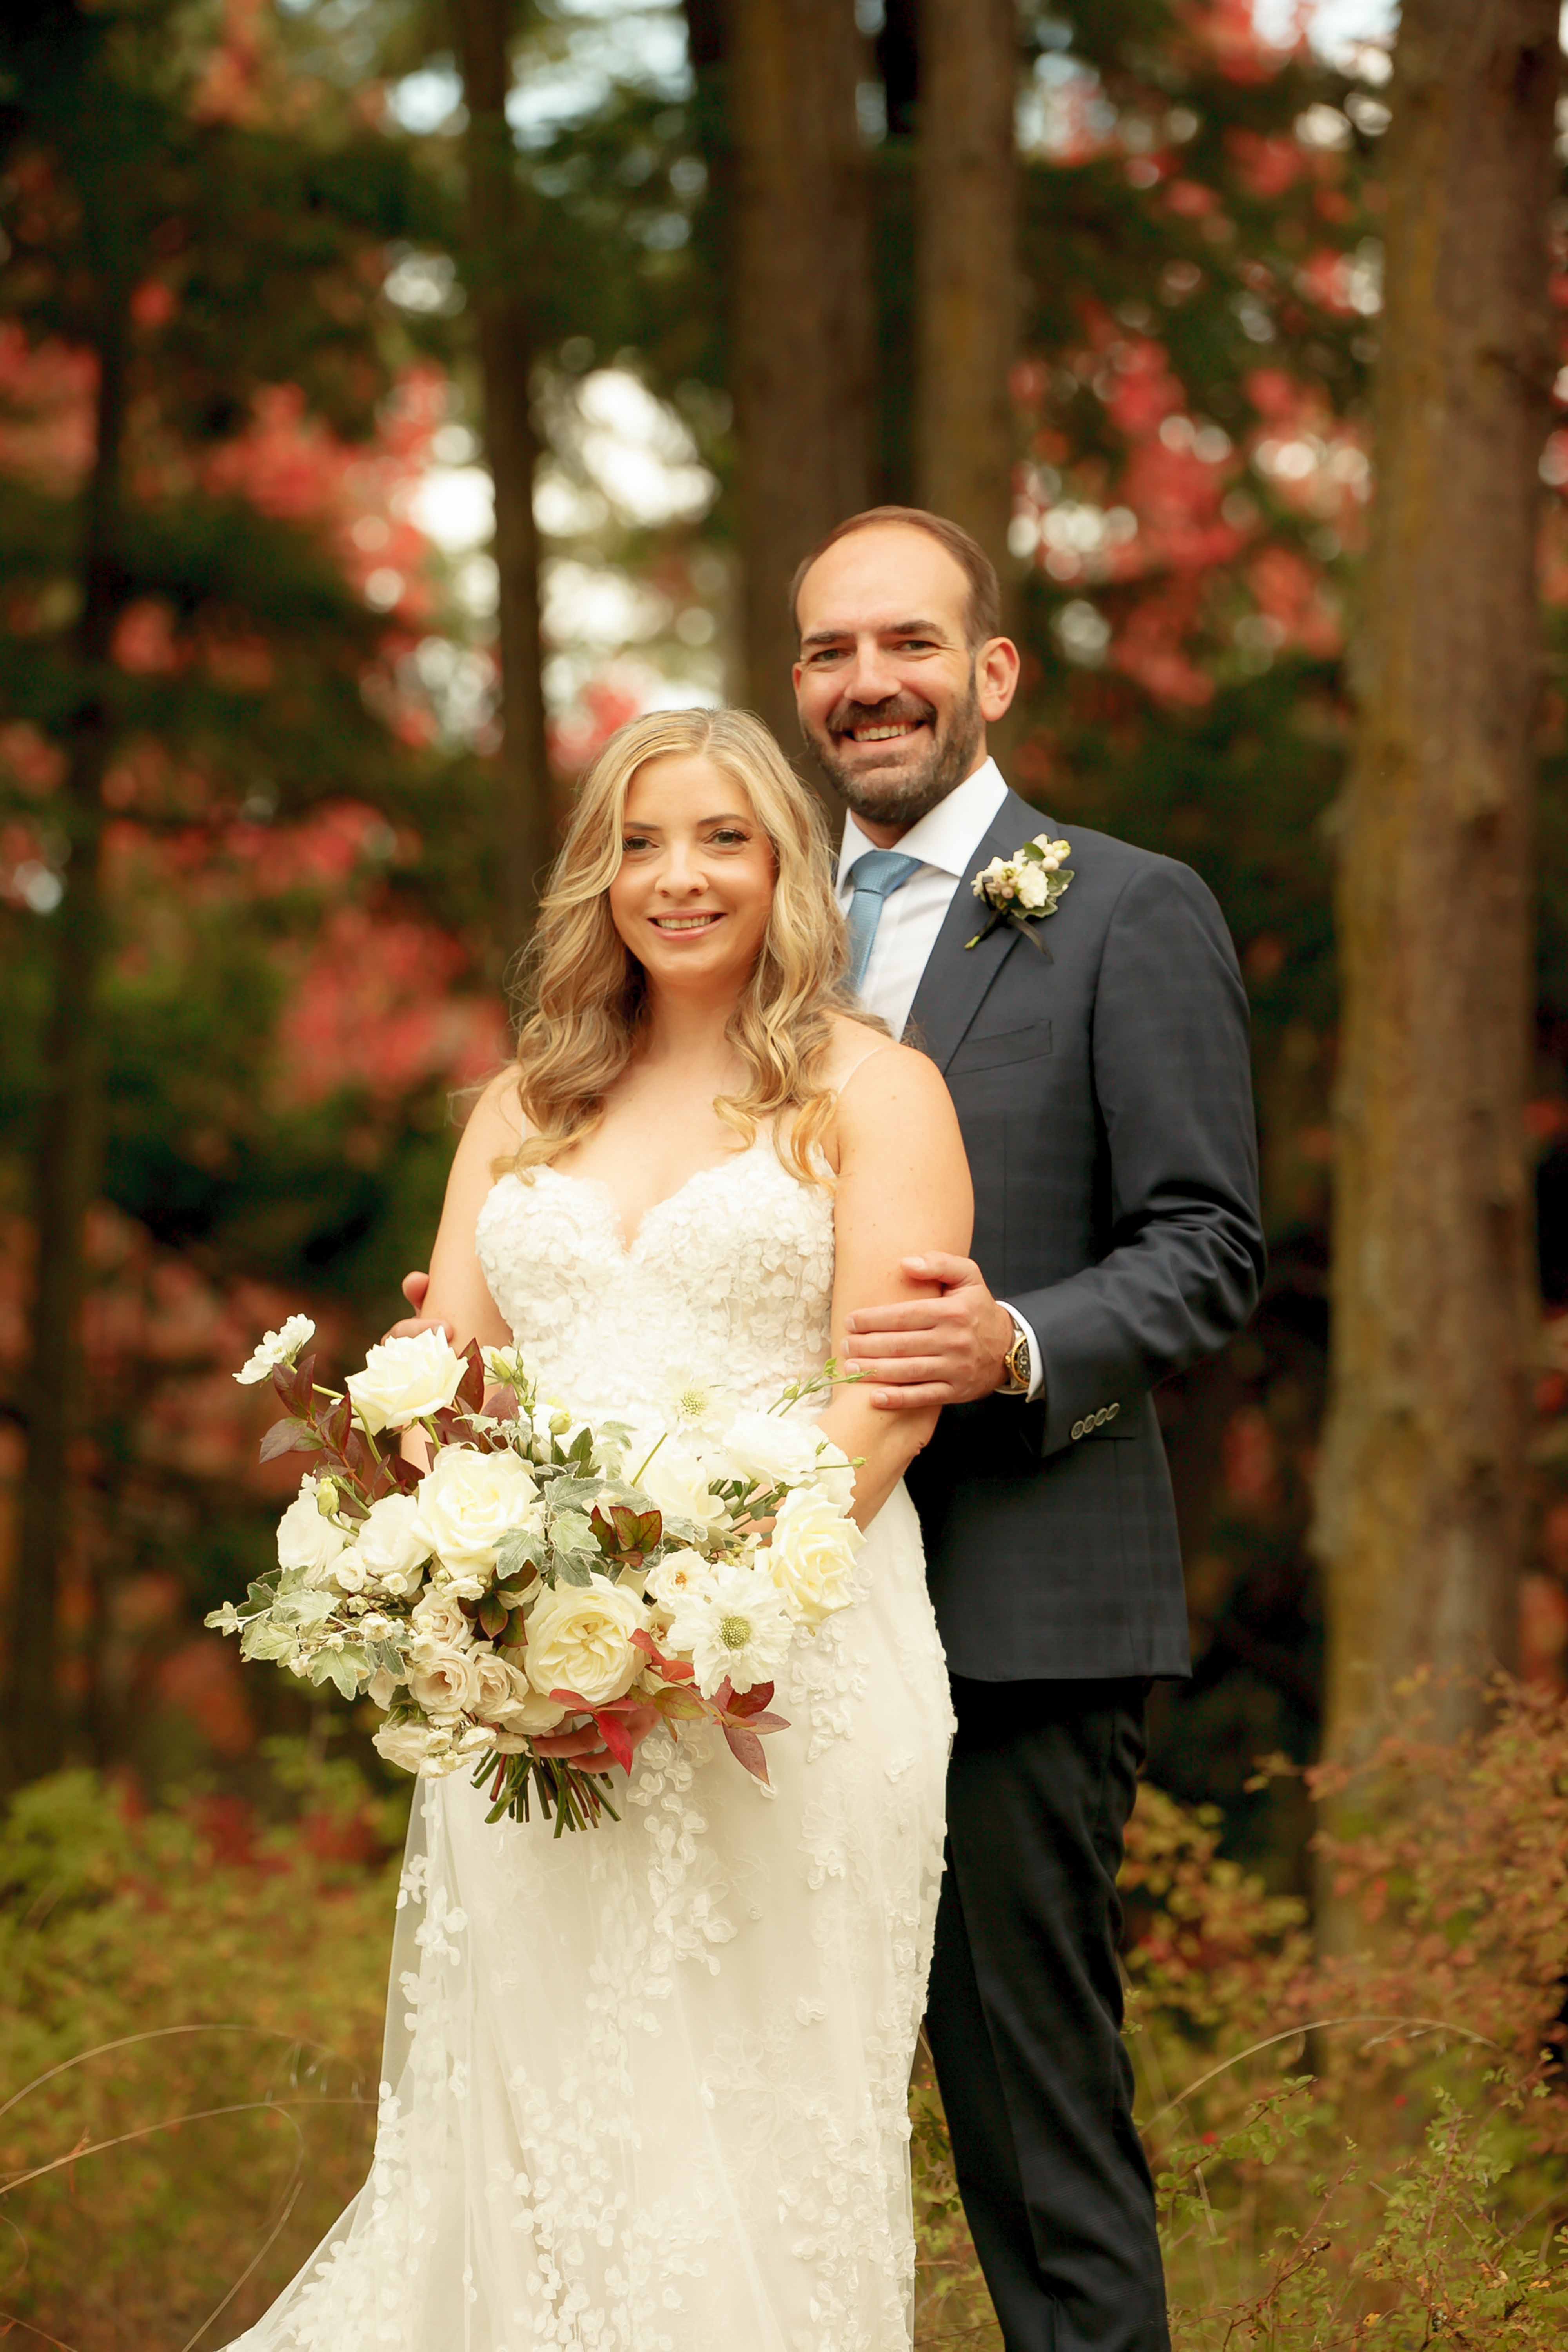 Beautiful wedding couple, bride holding bouquet of fall flowers, designed be Flora Nova Design